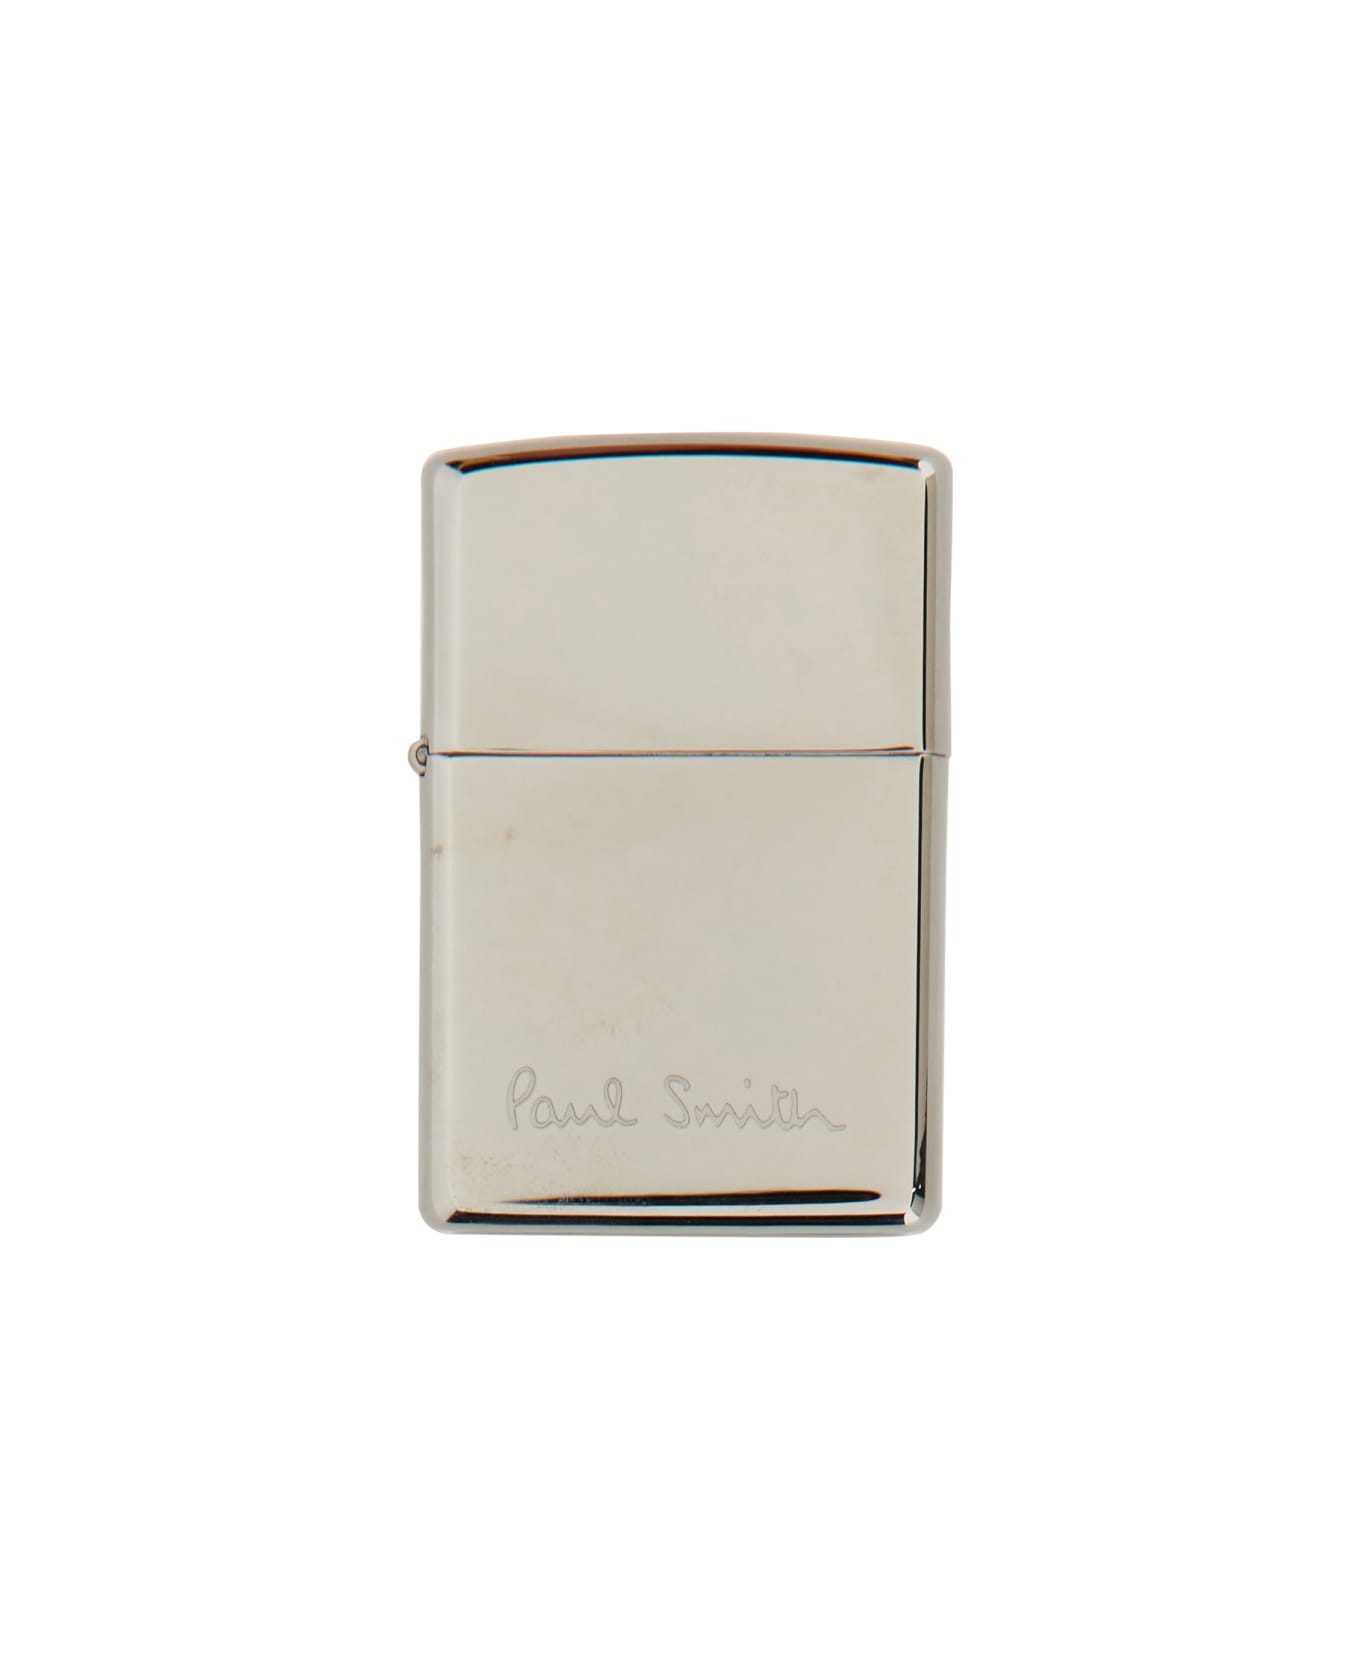 Paul Smith Zippo Lighter With Logo - SILVER